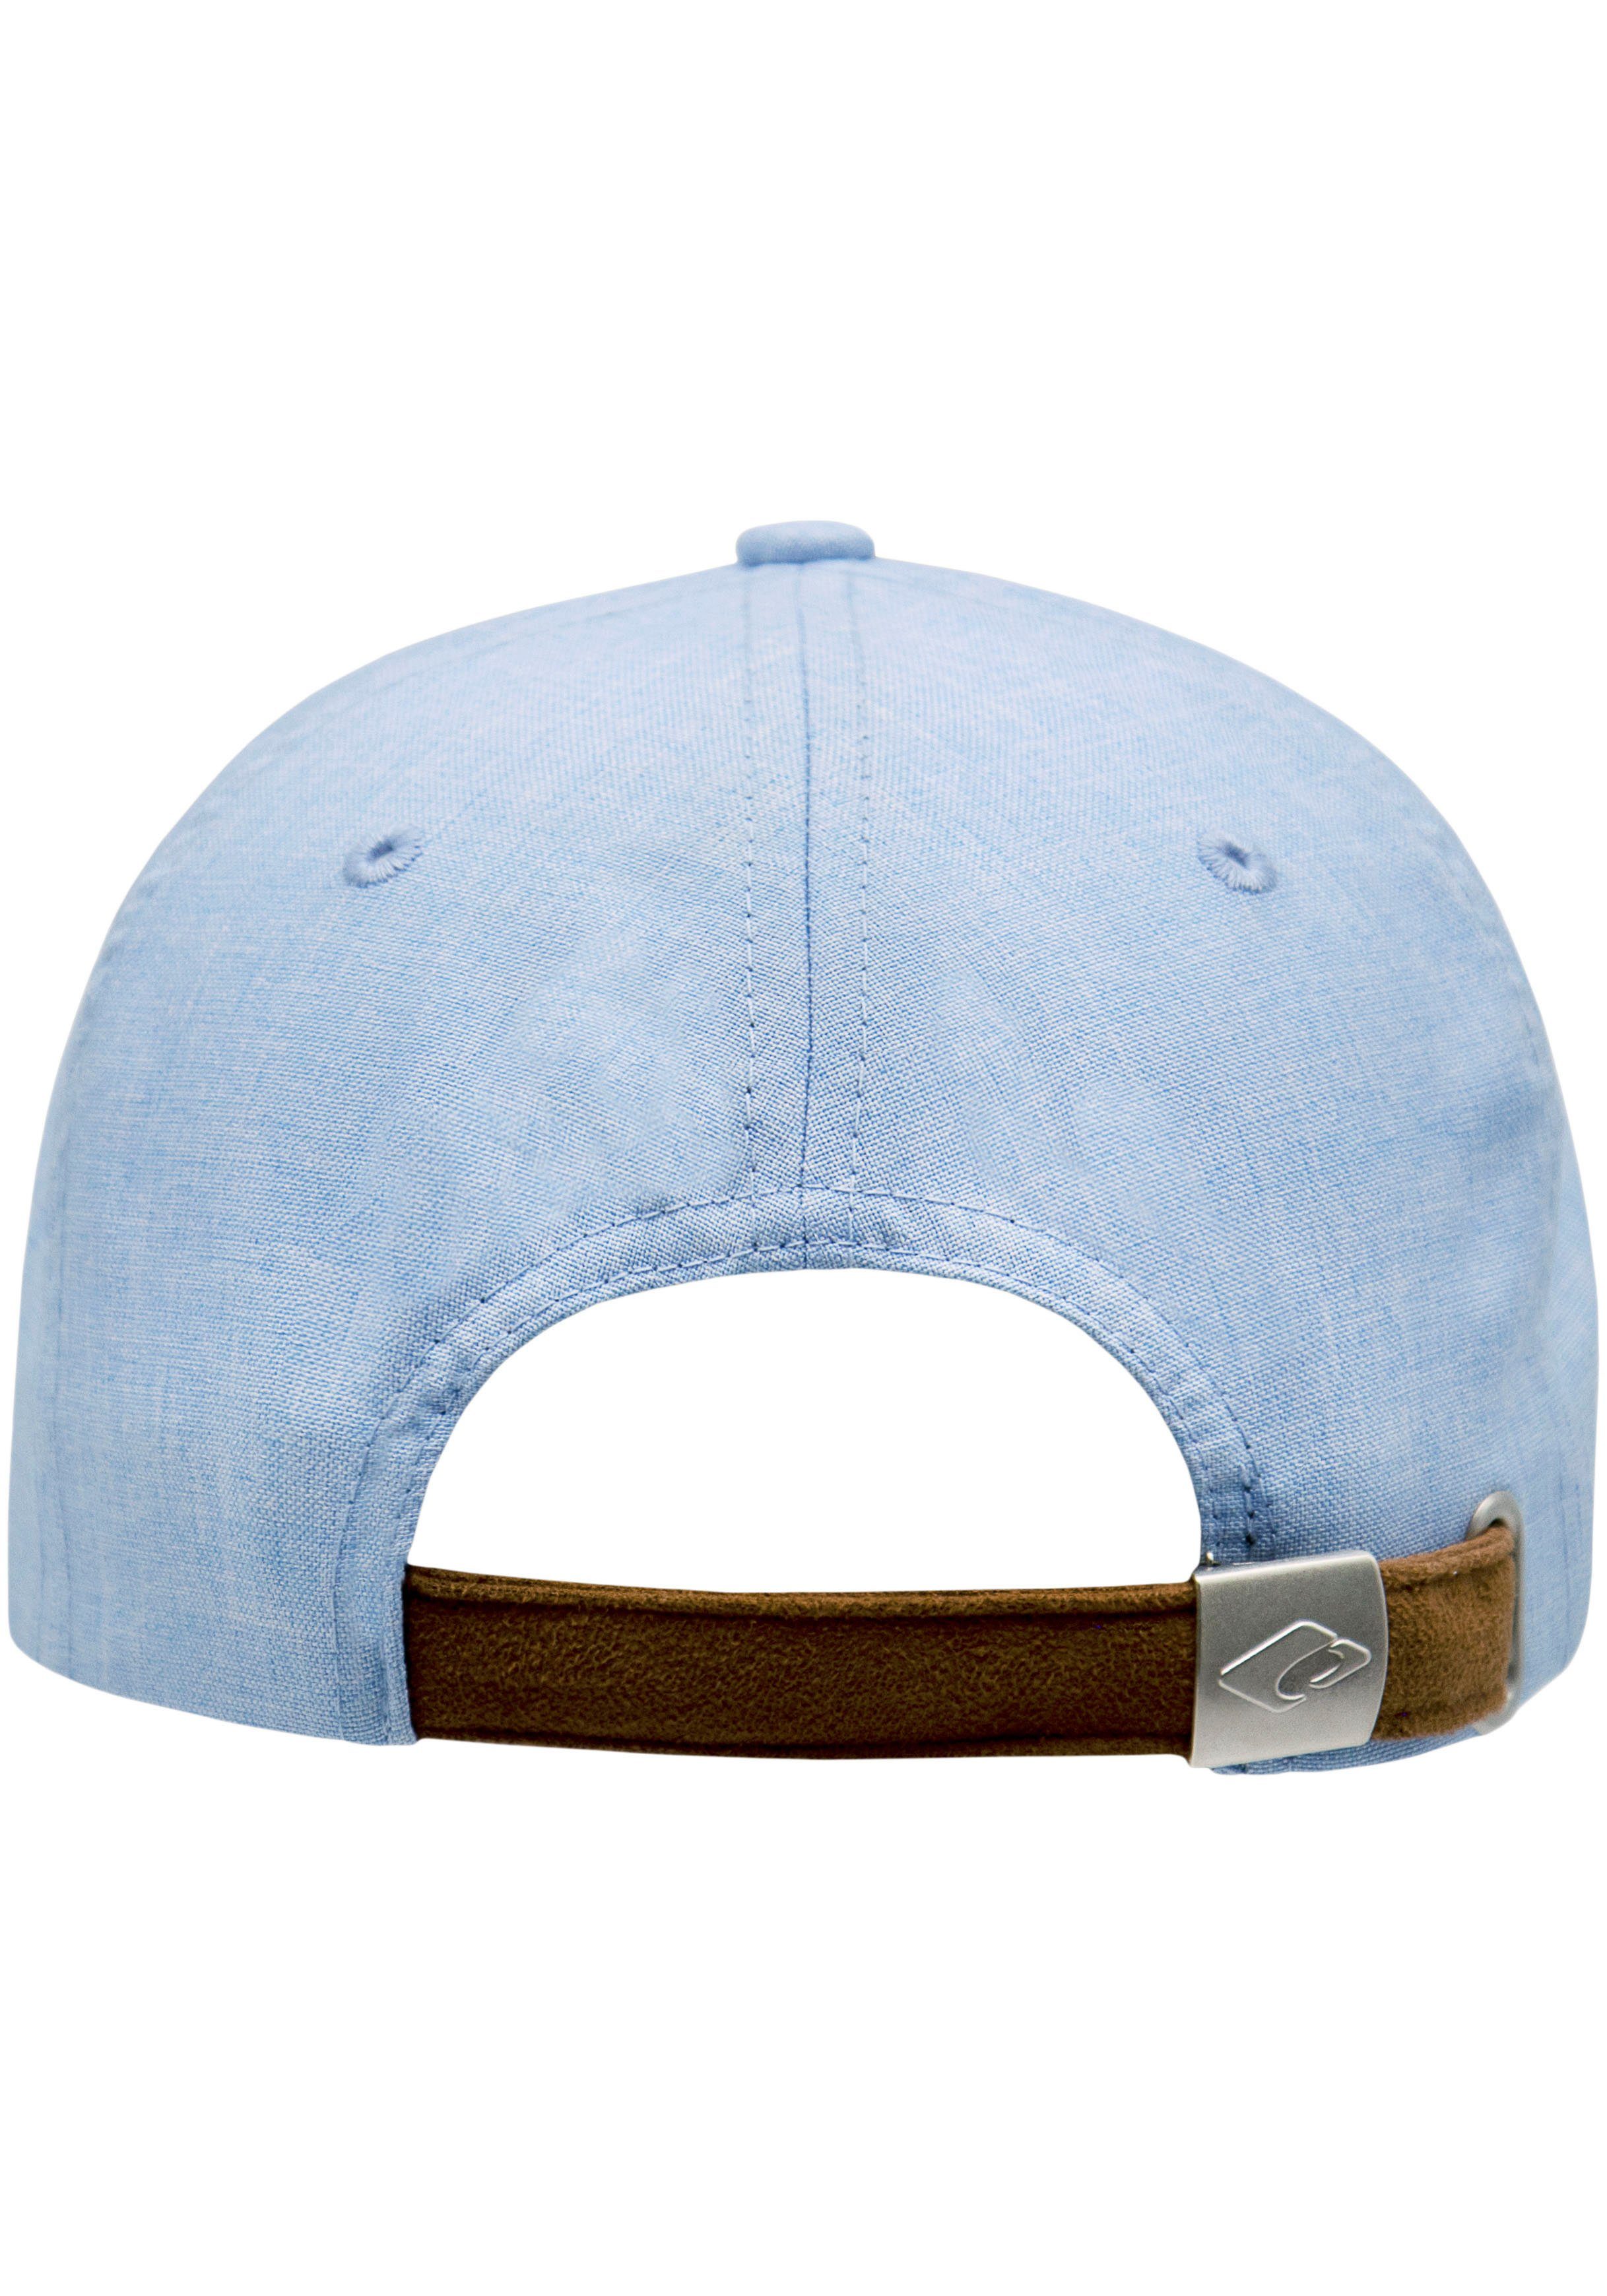 chillouts Baseball in Optik, Cap One Size, verstellbar Amadora hellblau melierter Hat